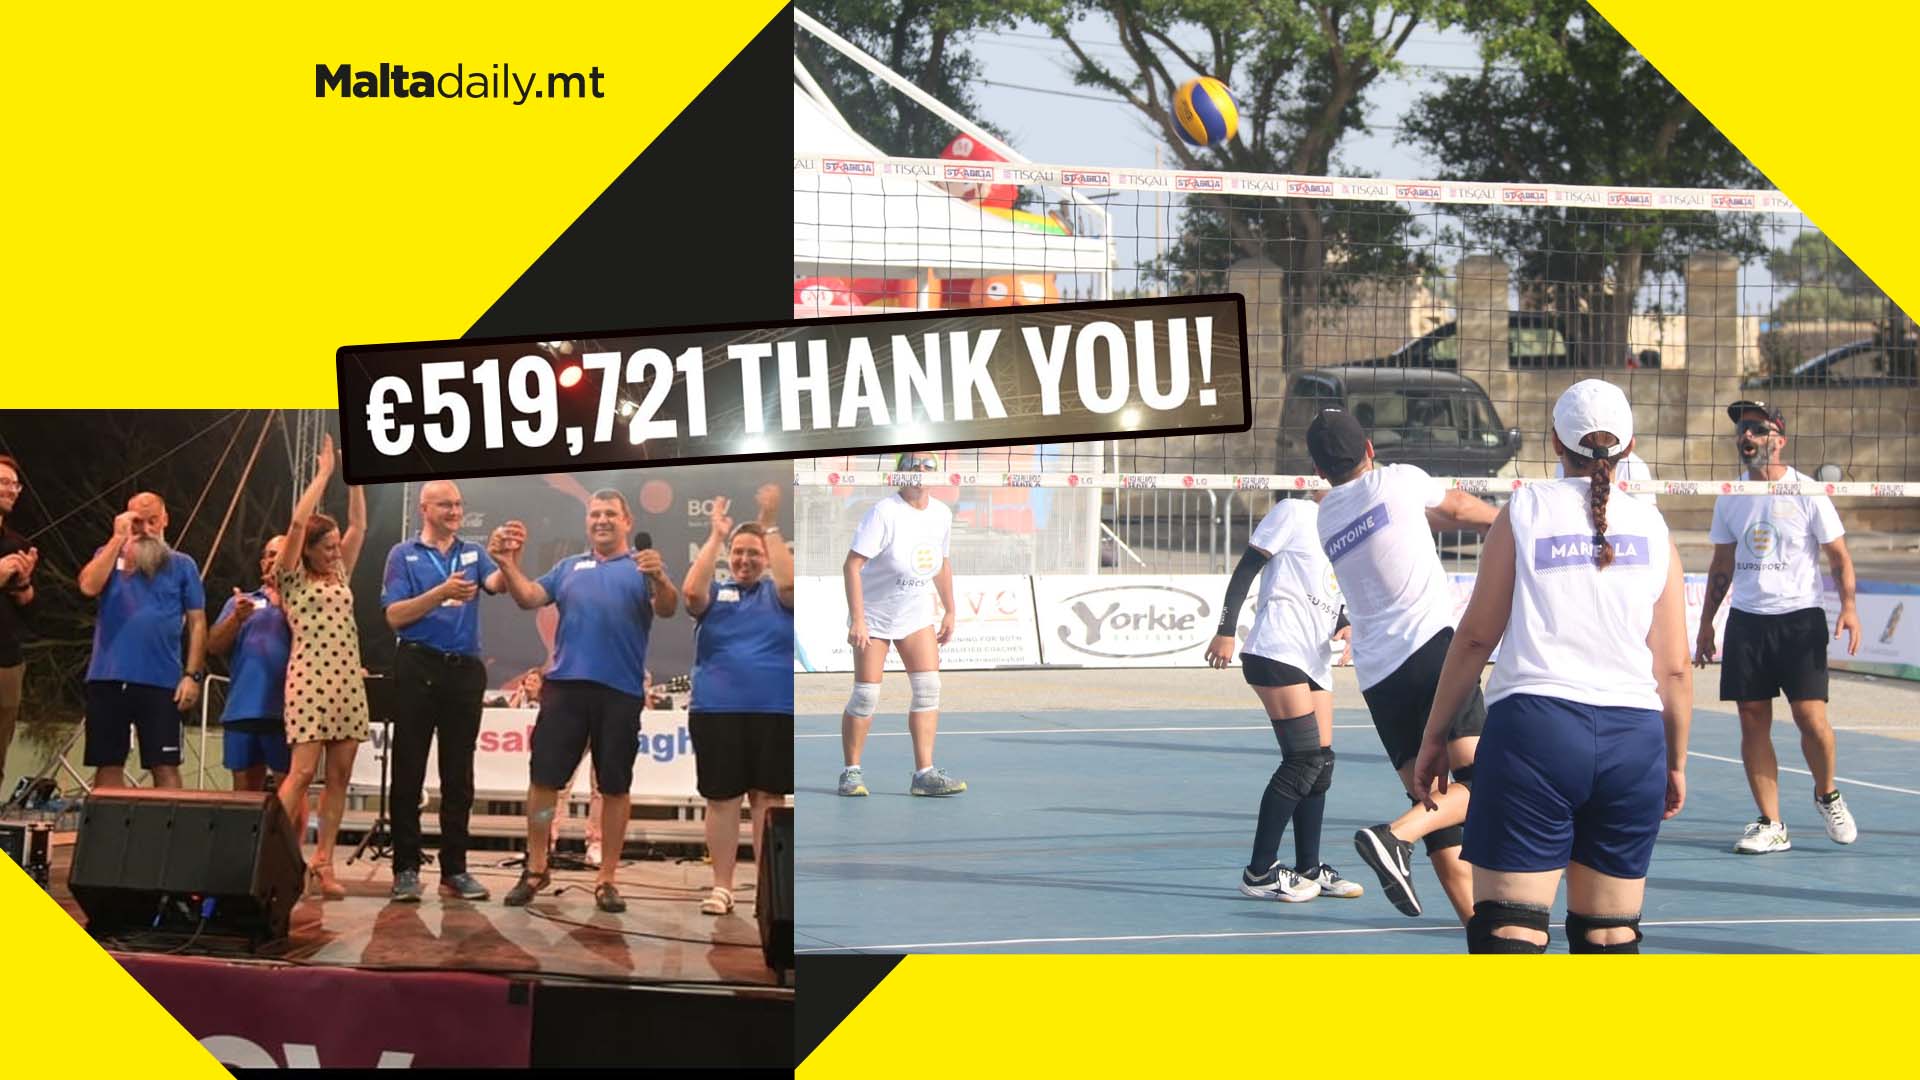 €519,721 raised on behalf of Dar tal-Providenza through volleyball marathon